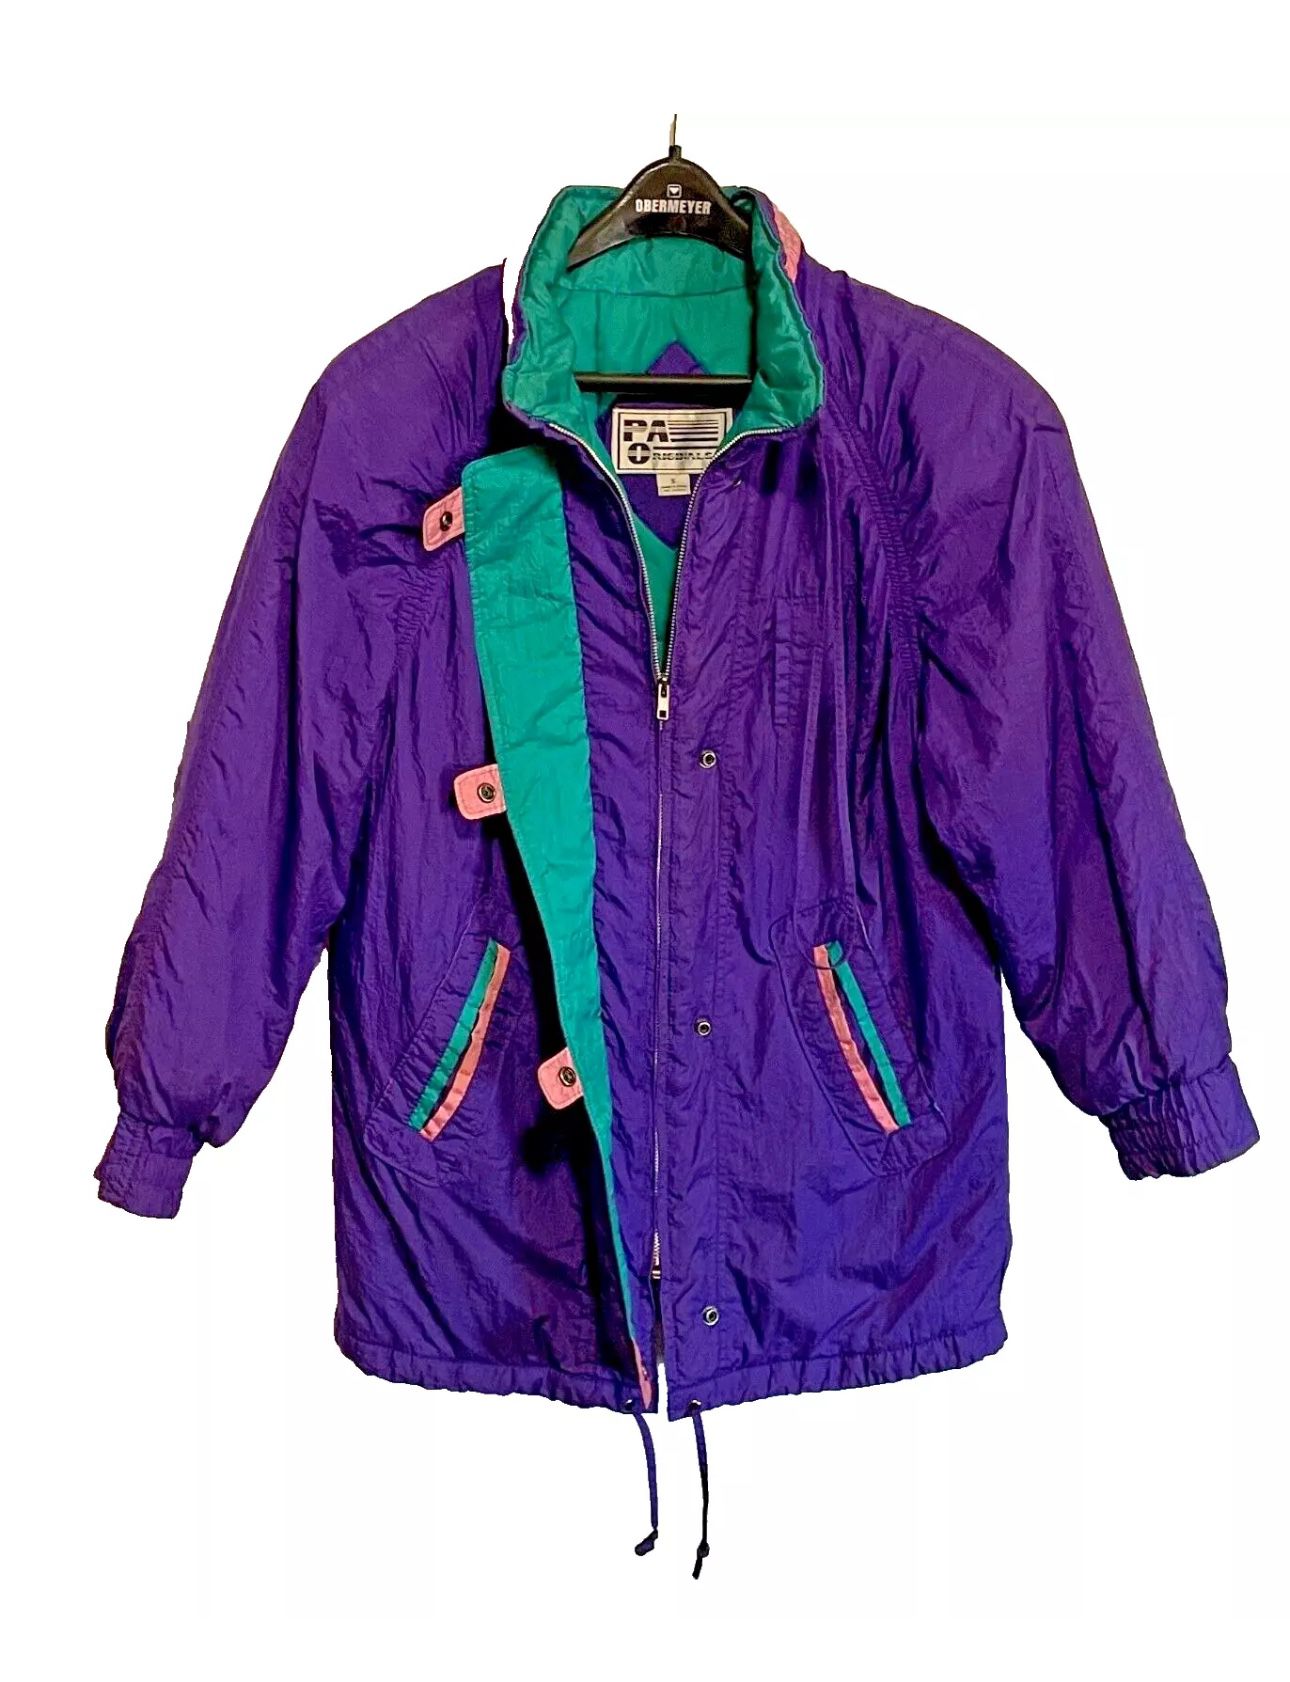 Vintage 80s Pa Originals Nylon Unisex Size Small Winter Parka Jacket Coat Ski